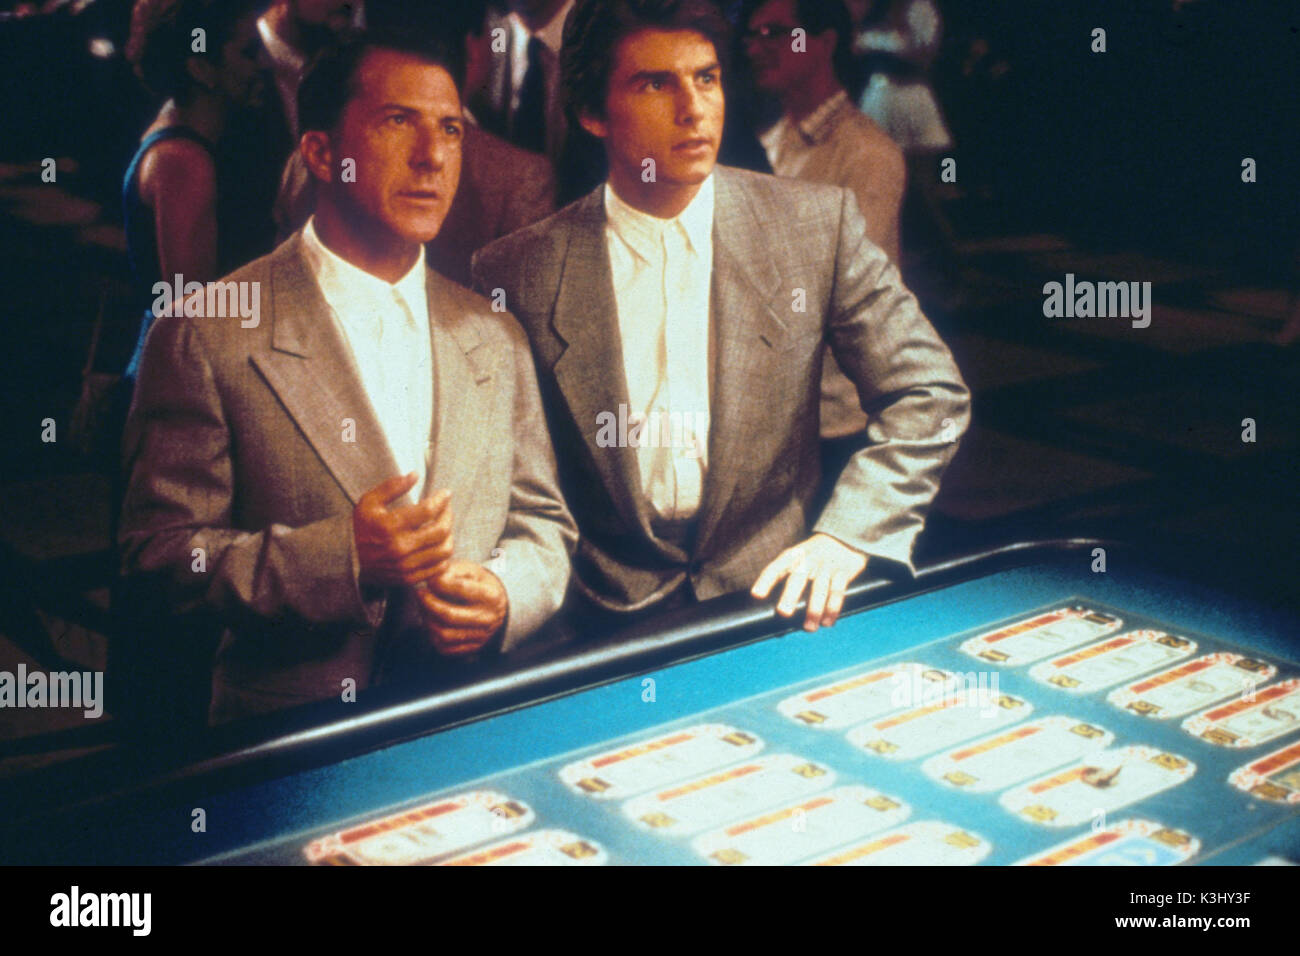 Tom Cruise, Dustin Hoffman, Rain Man, 1988, film Banque D'Images